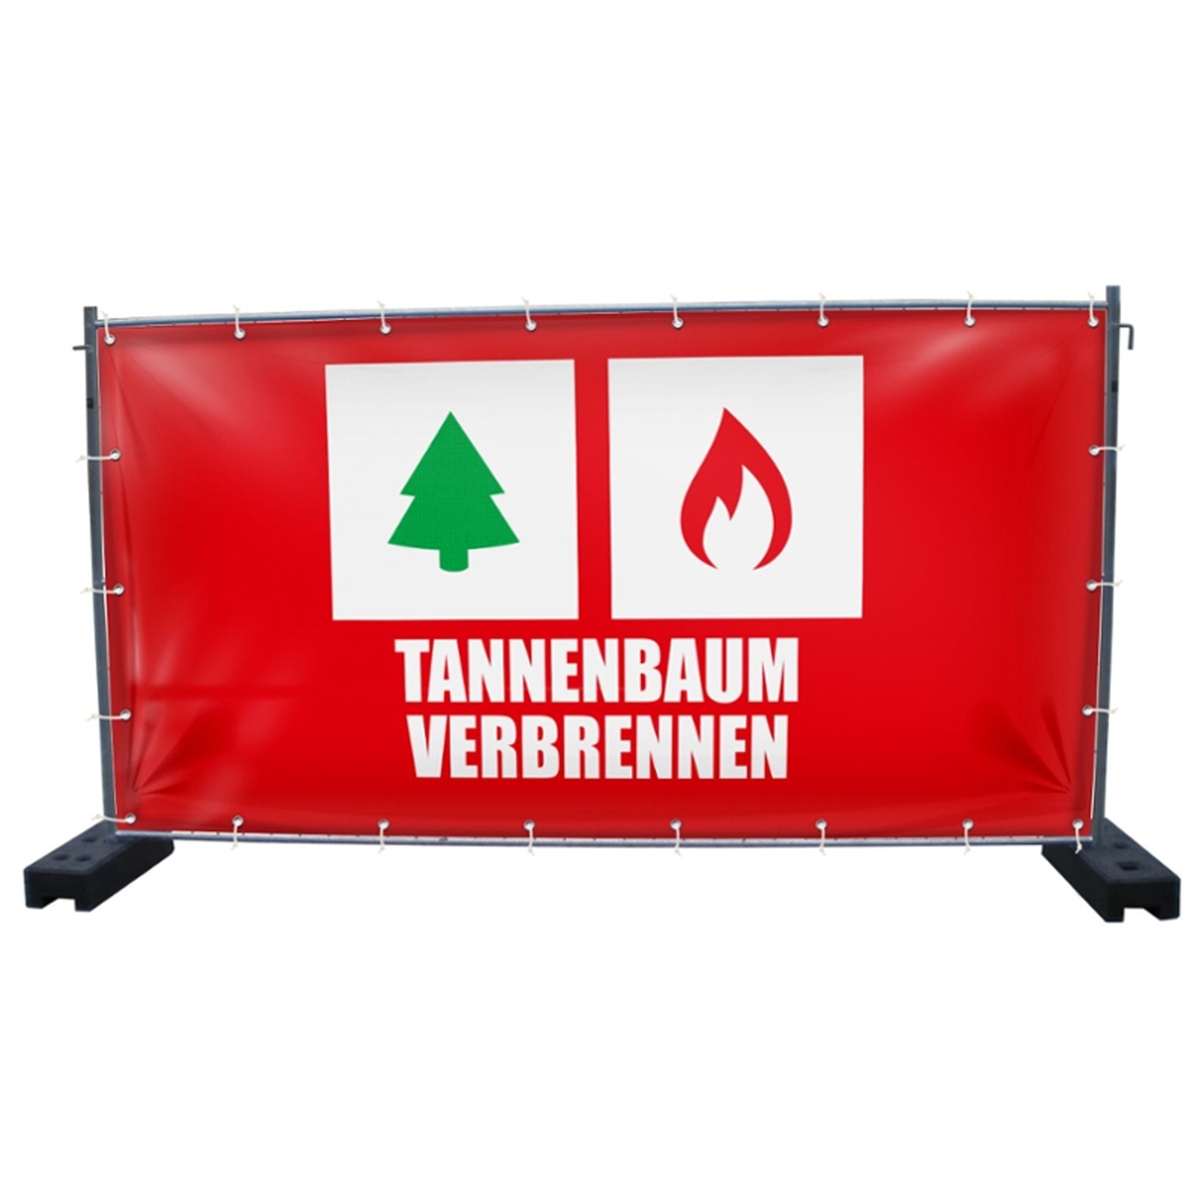 340 x 173 cm | Tannenbaum Verbrennen Bauzaunbanner (2807)